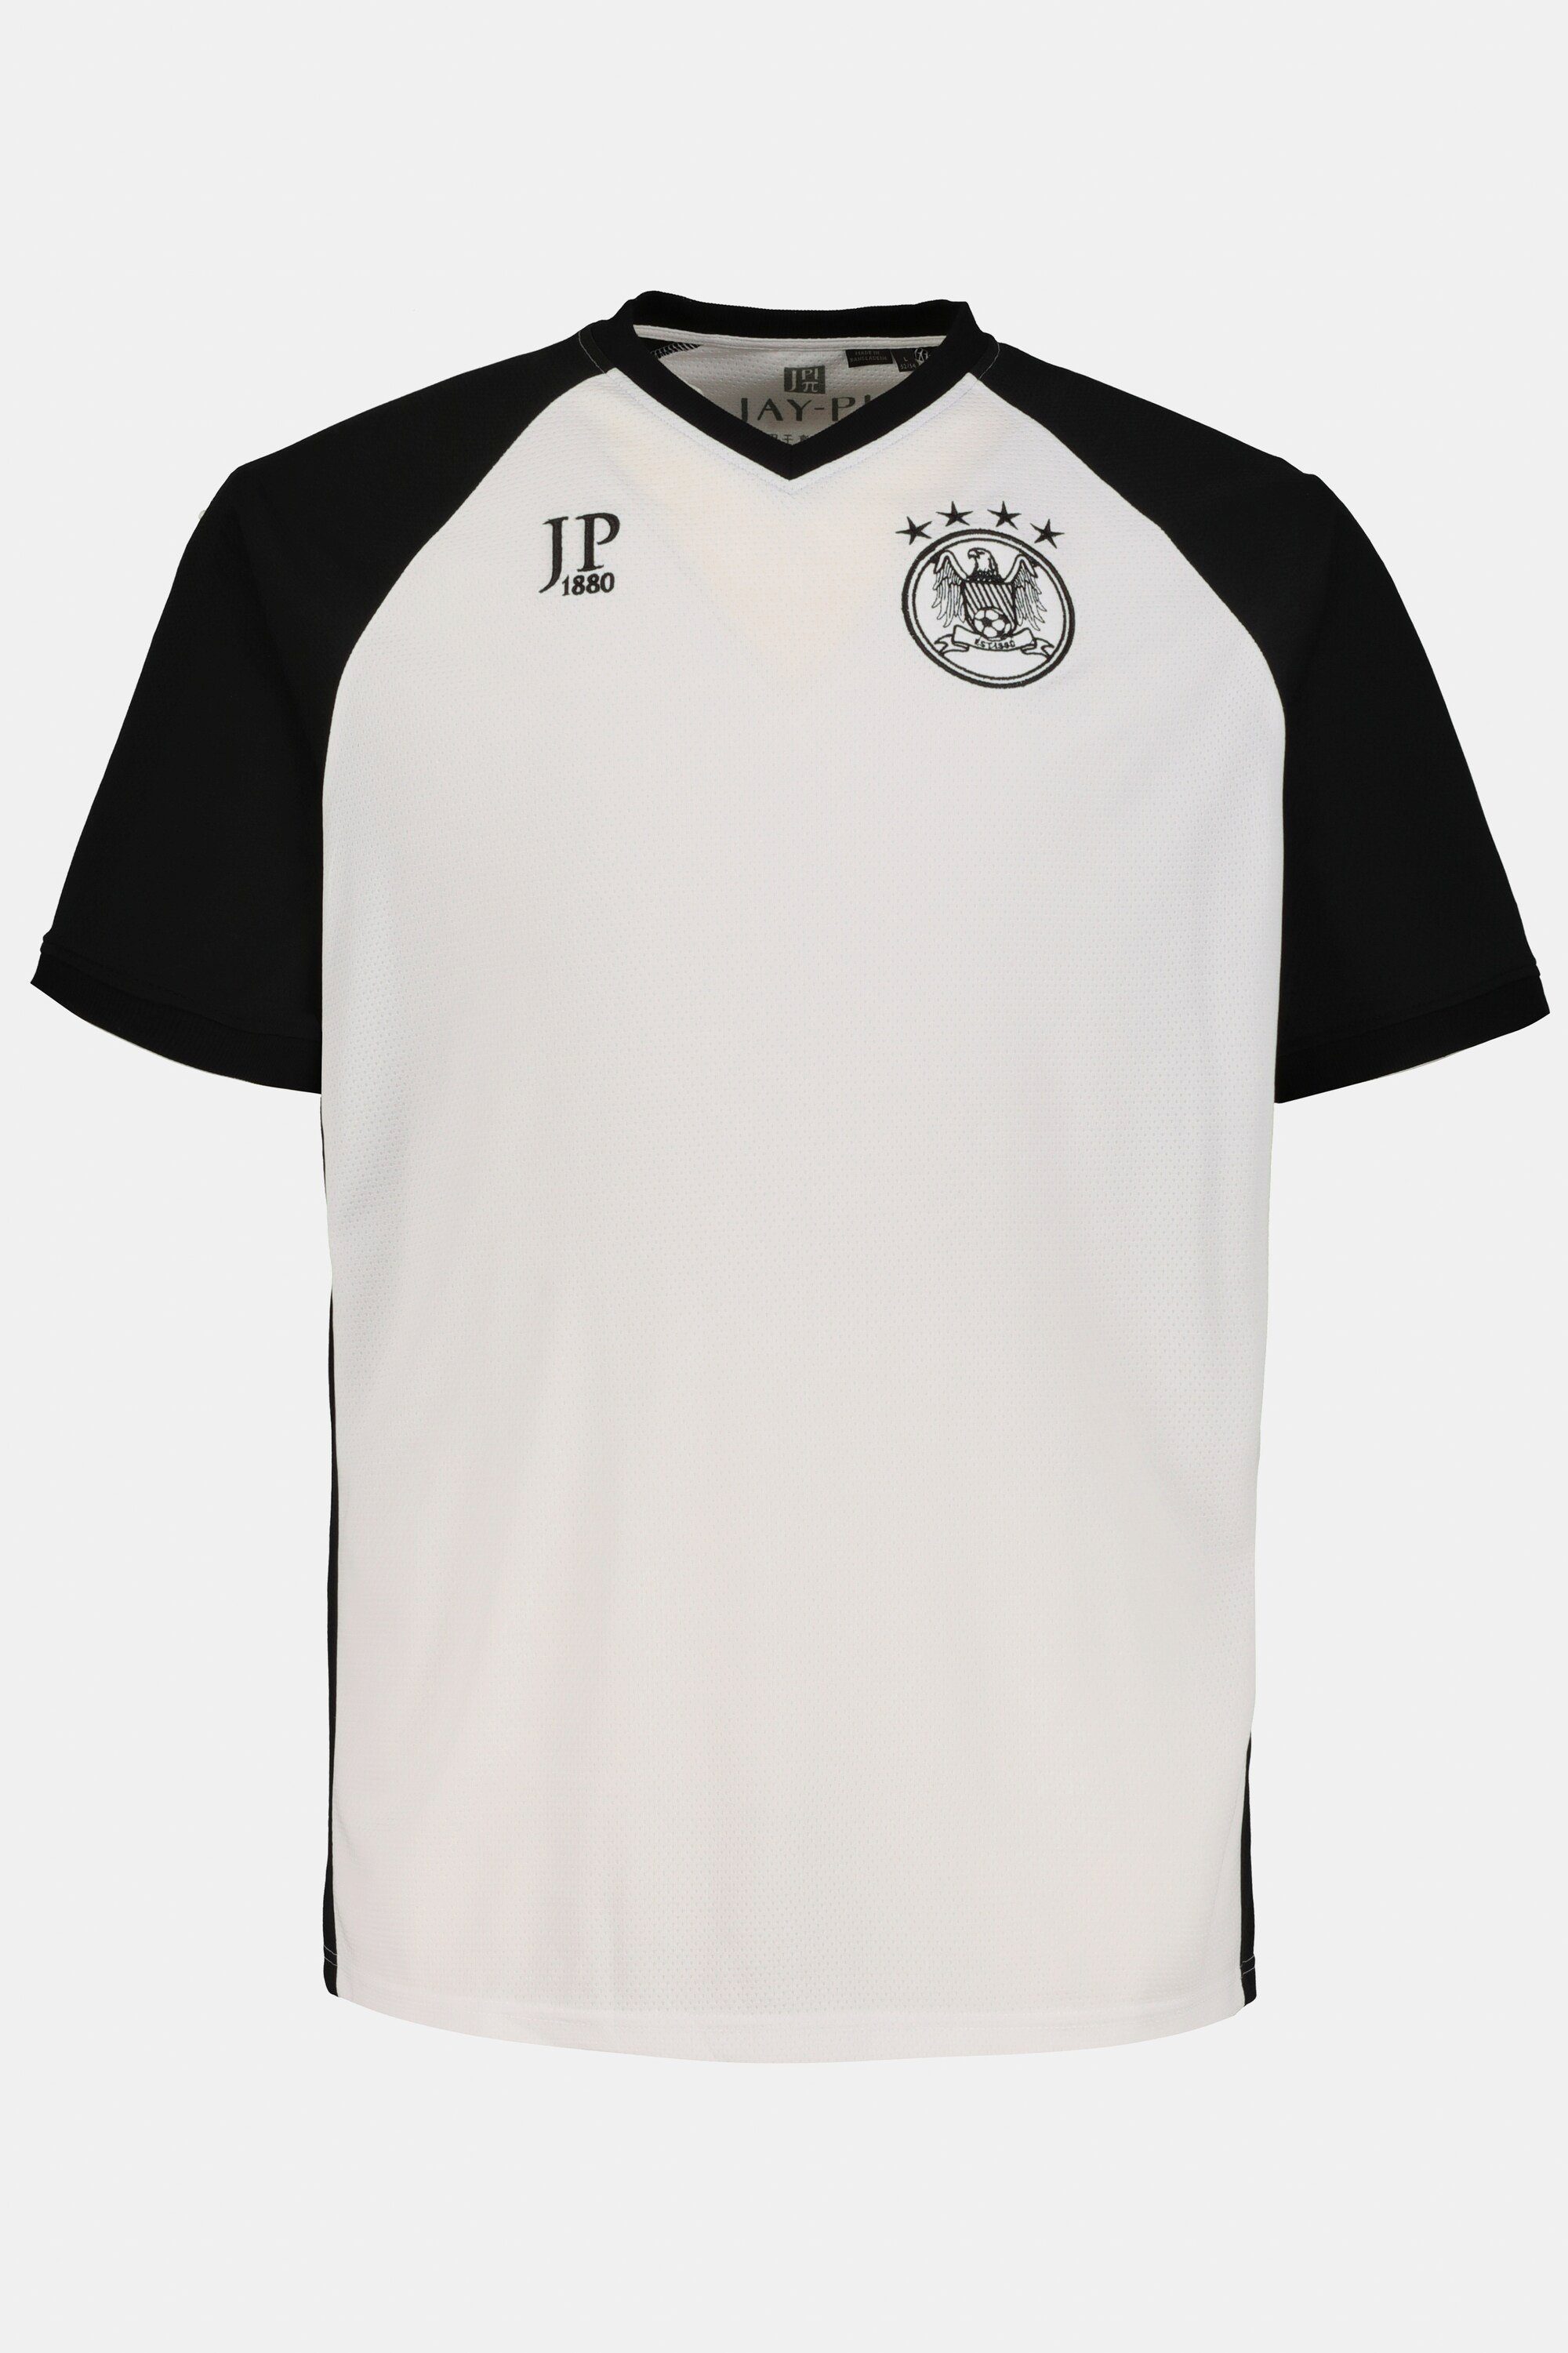 Trikot JAY-PI T-Shirt Fußball Halbarm JP1880